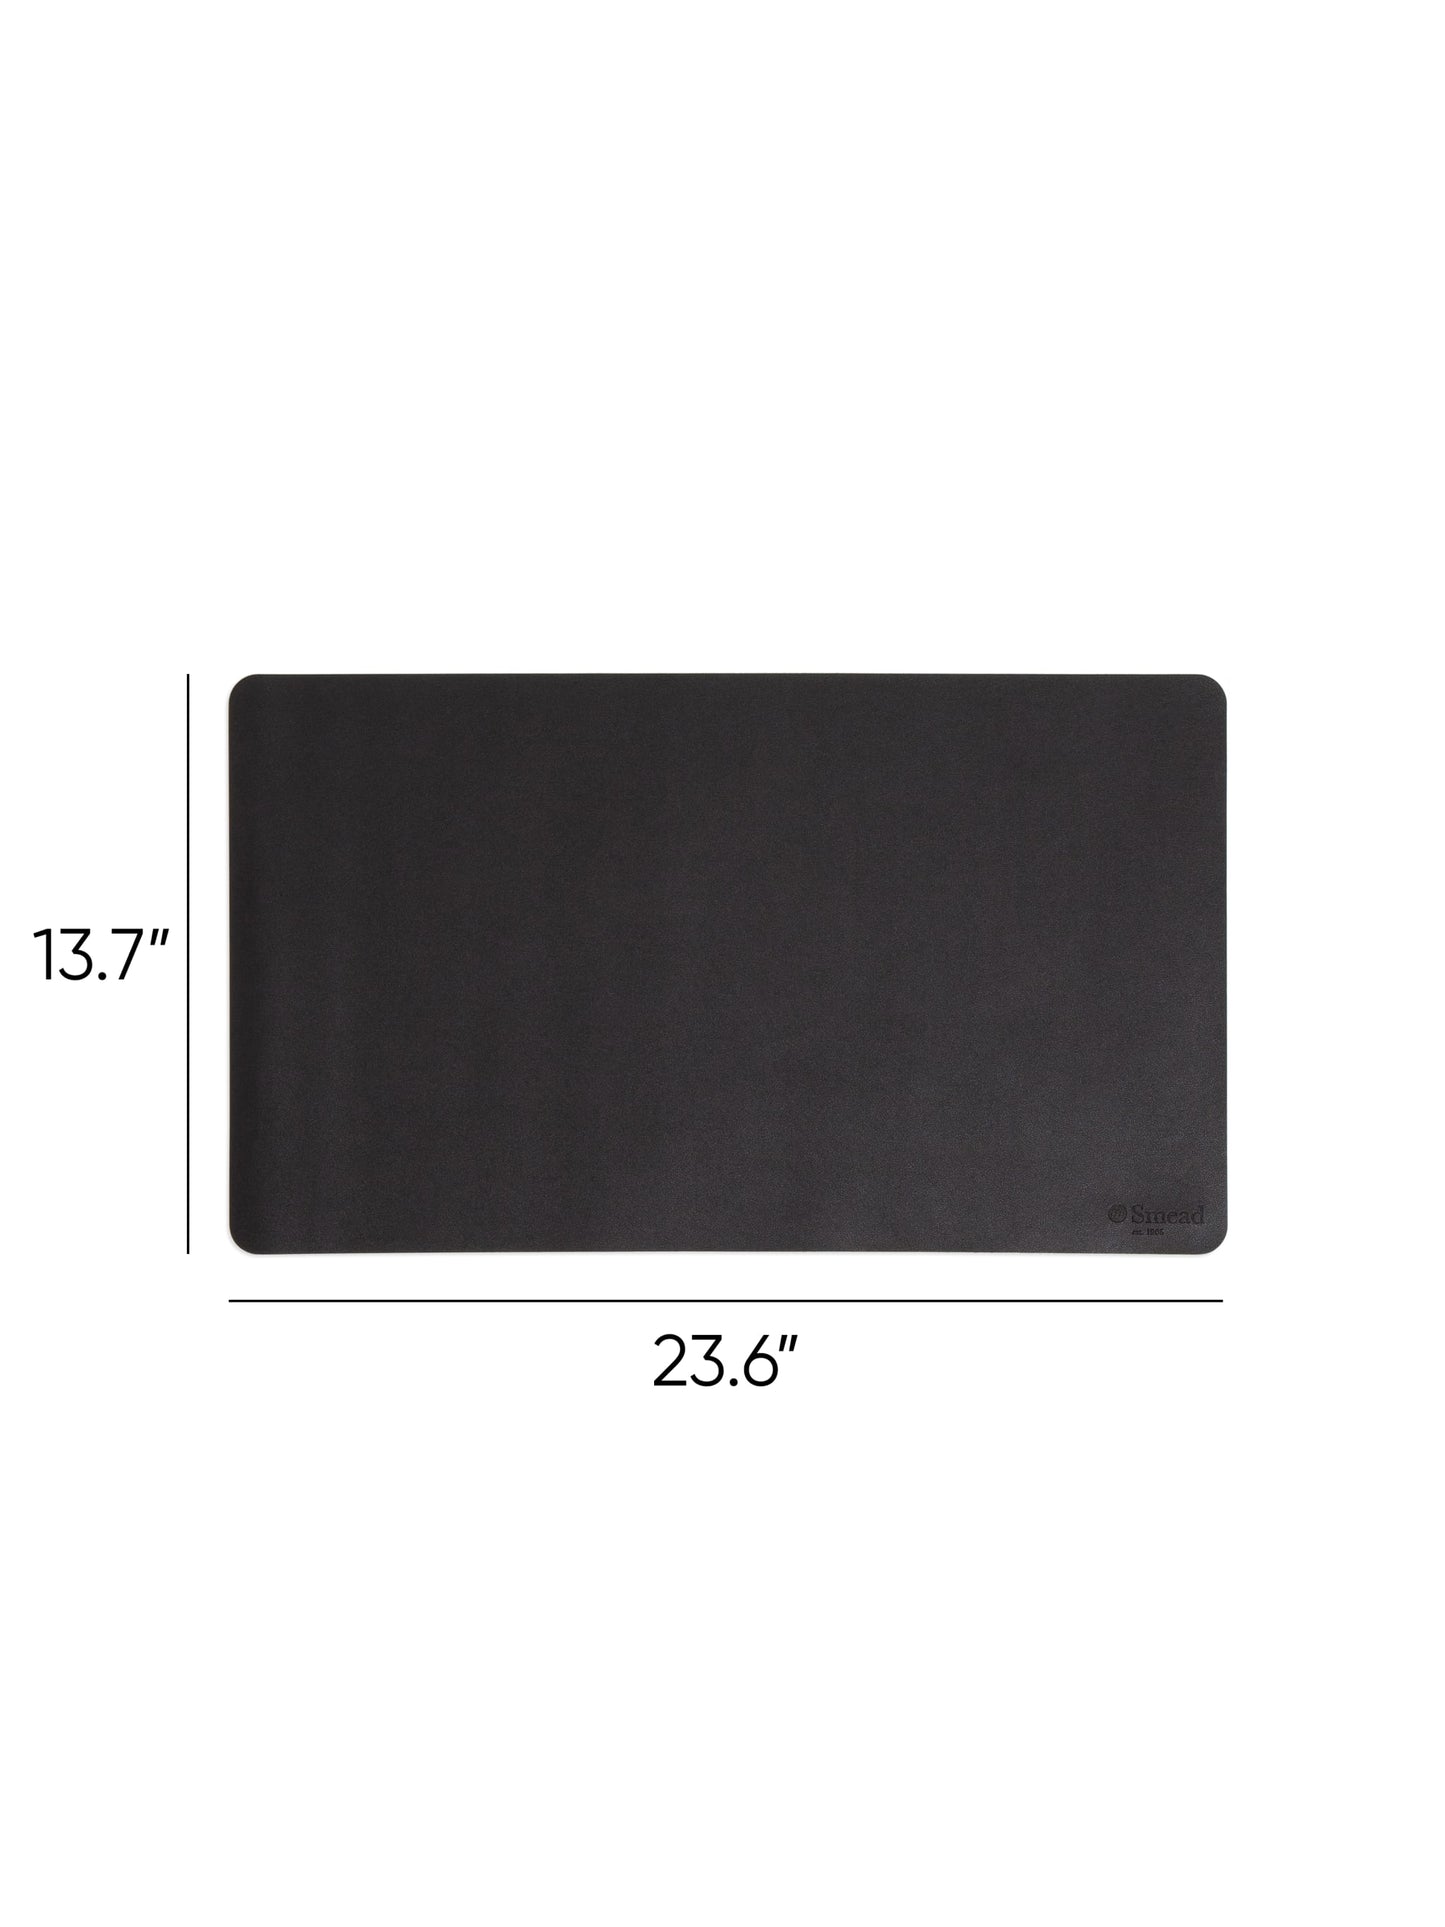 Vegan Leather Desk Pad, Charcoal Color, 23.6"X13.7" Size, 086486648387